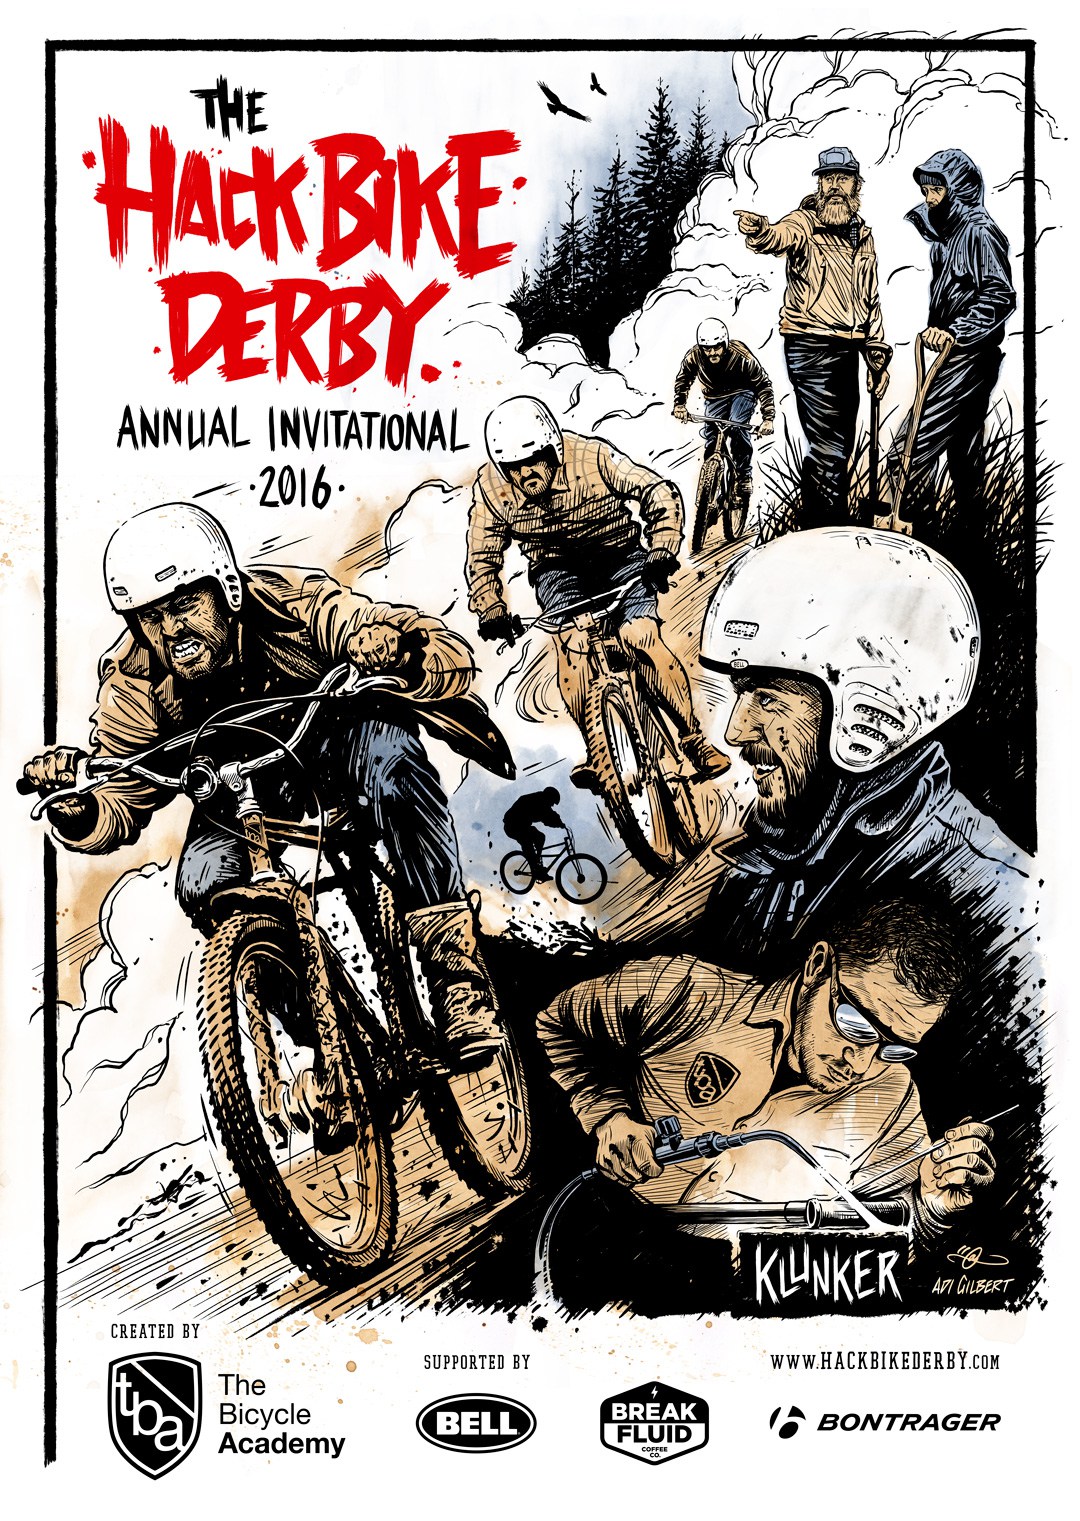 Hack Bike Derby Poster by Adi Gilbert